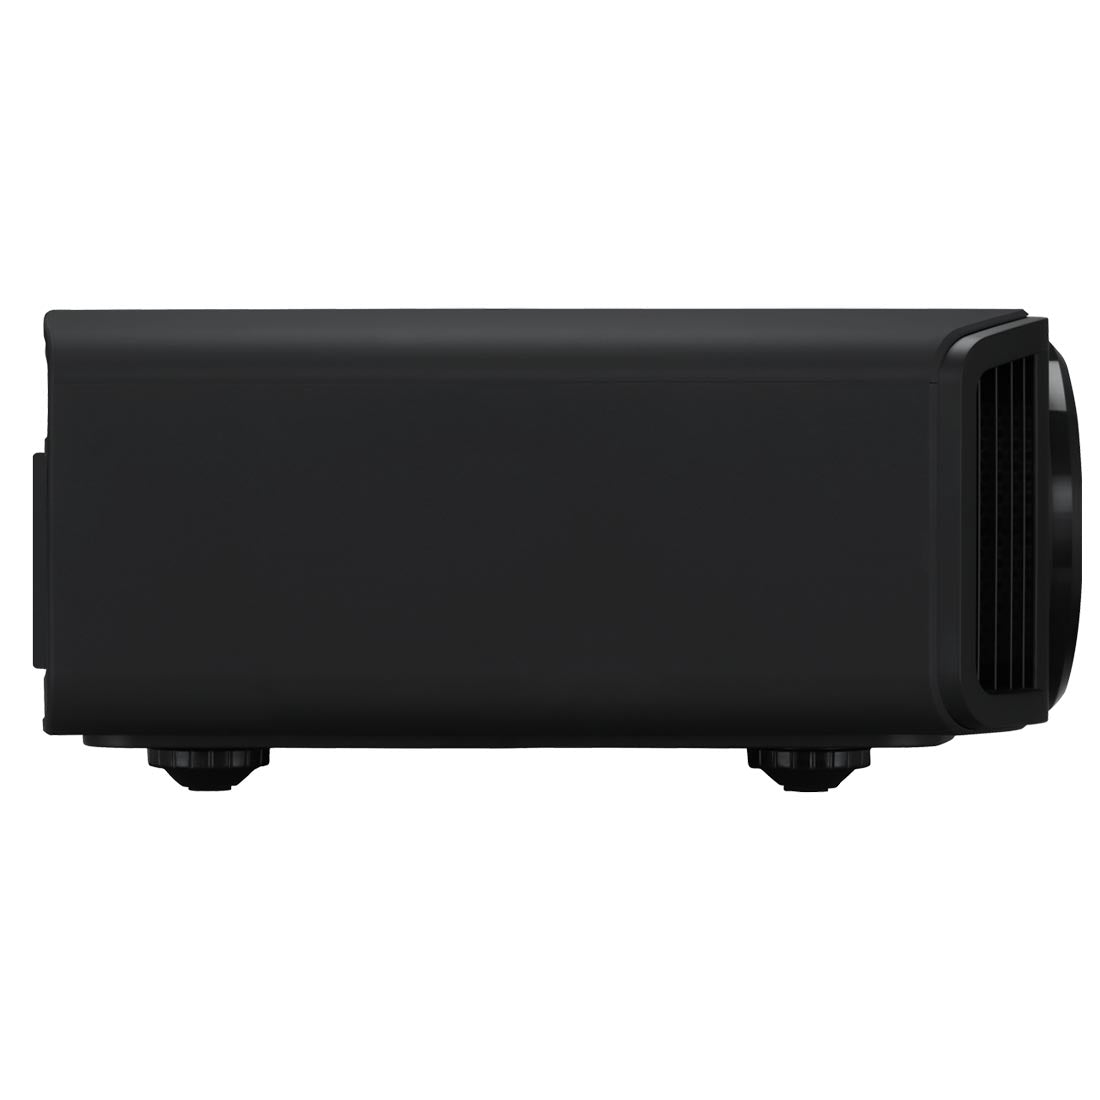 JVC DLA-NZ800 8K e-ShiftX D-ILA Home Theater Laser Projector - Black